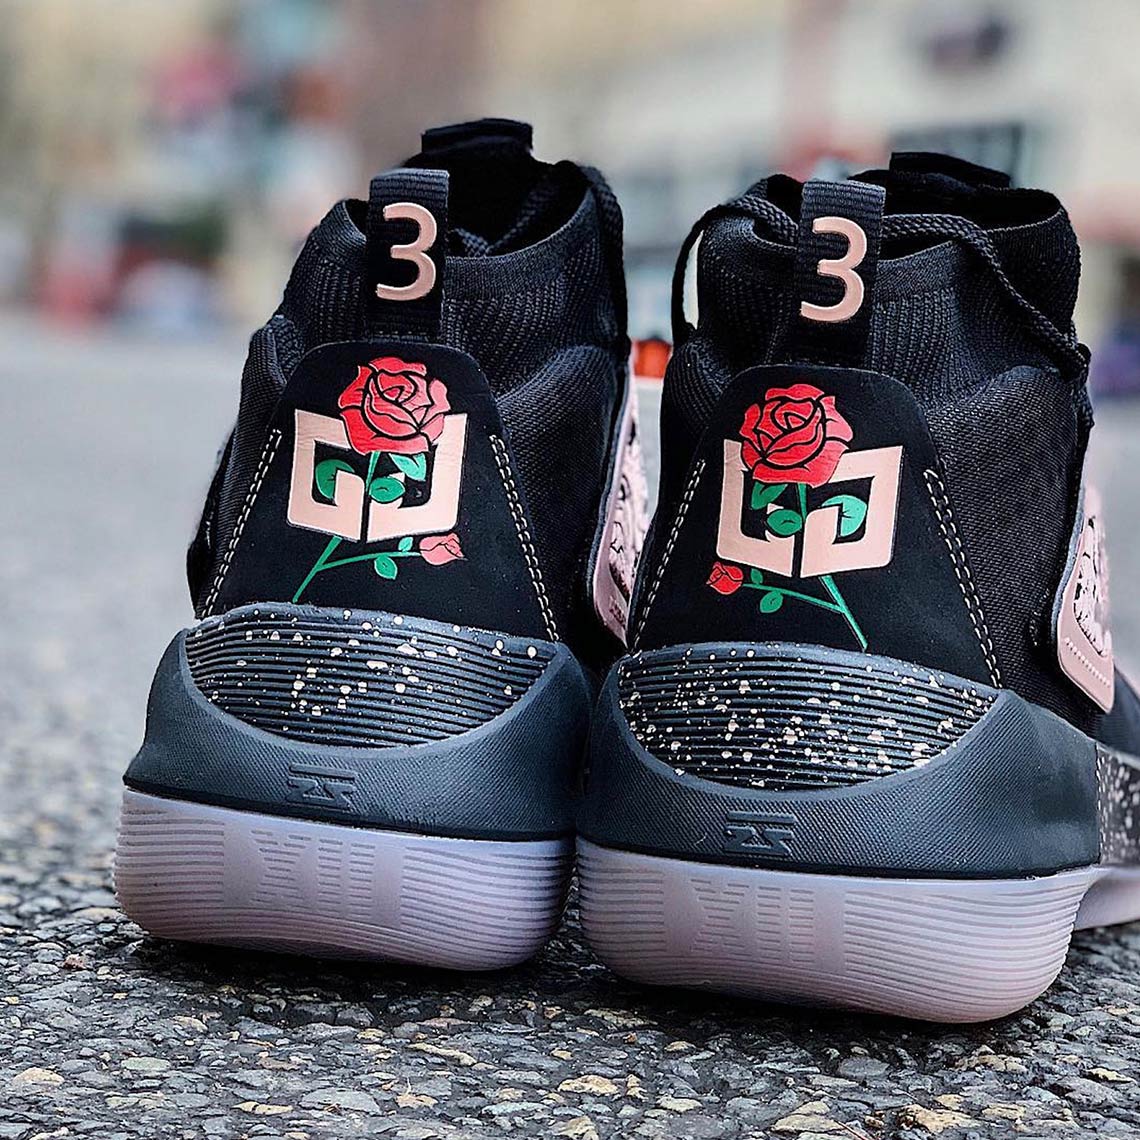 cj mccollum rose city shoes